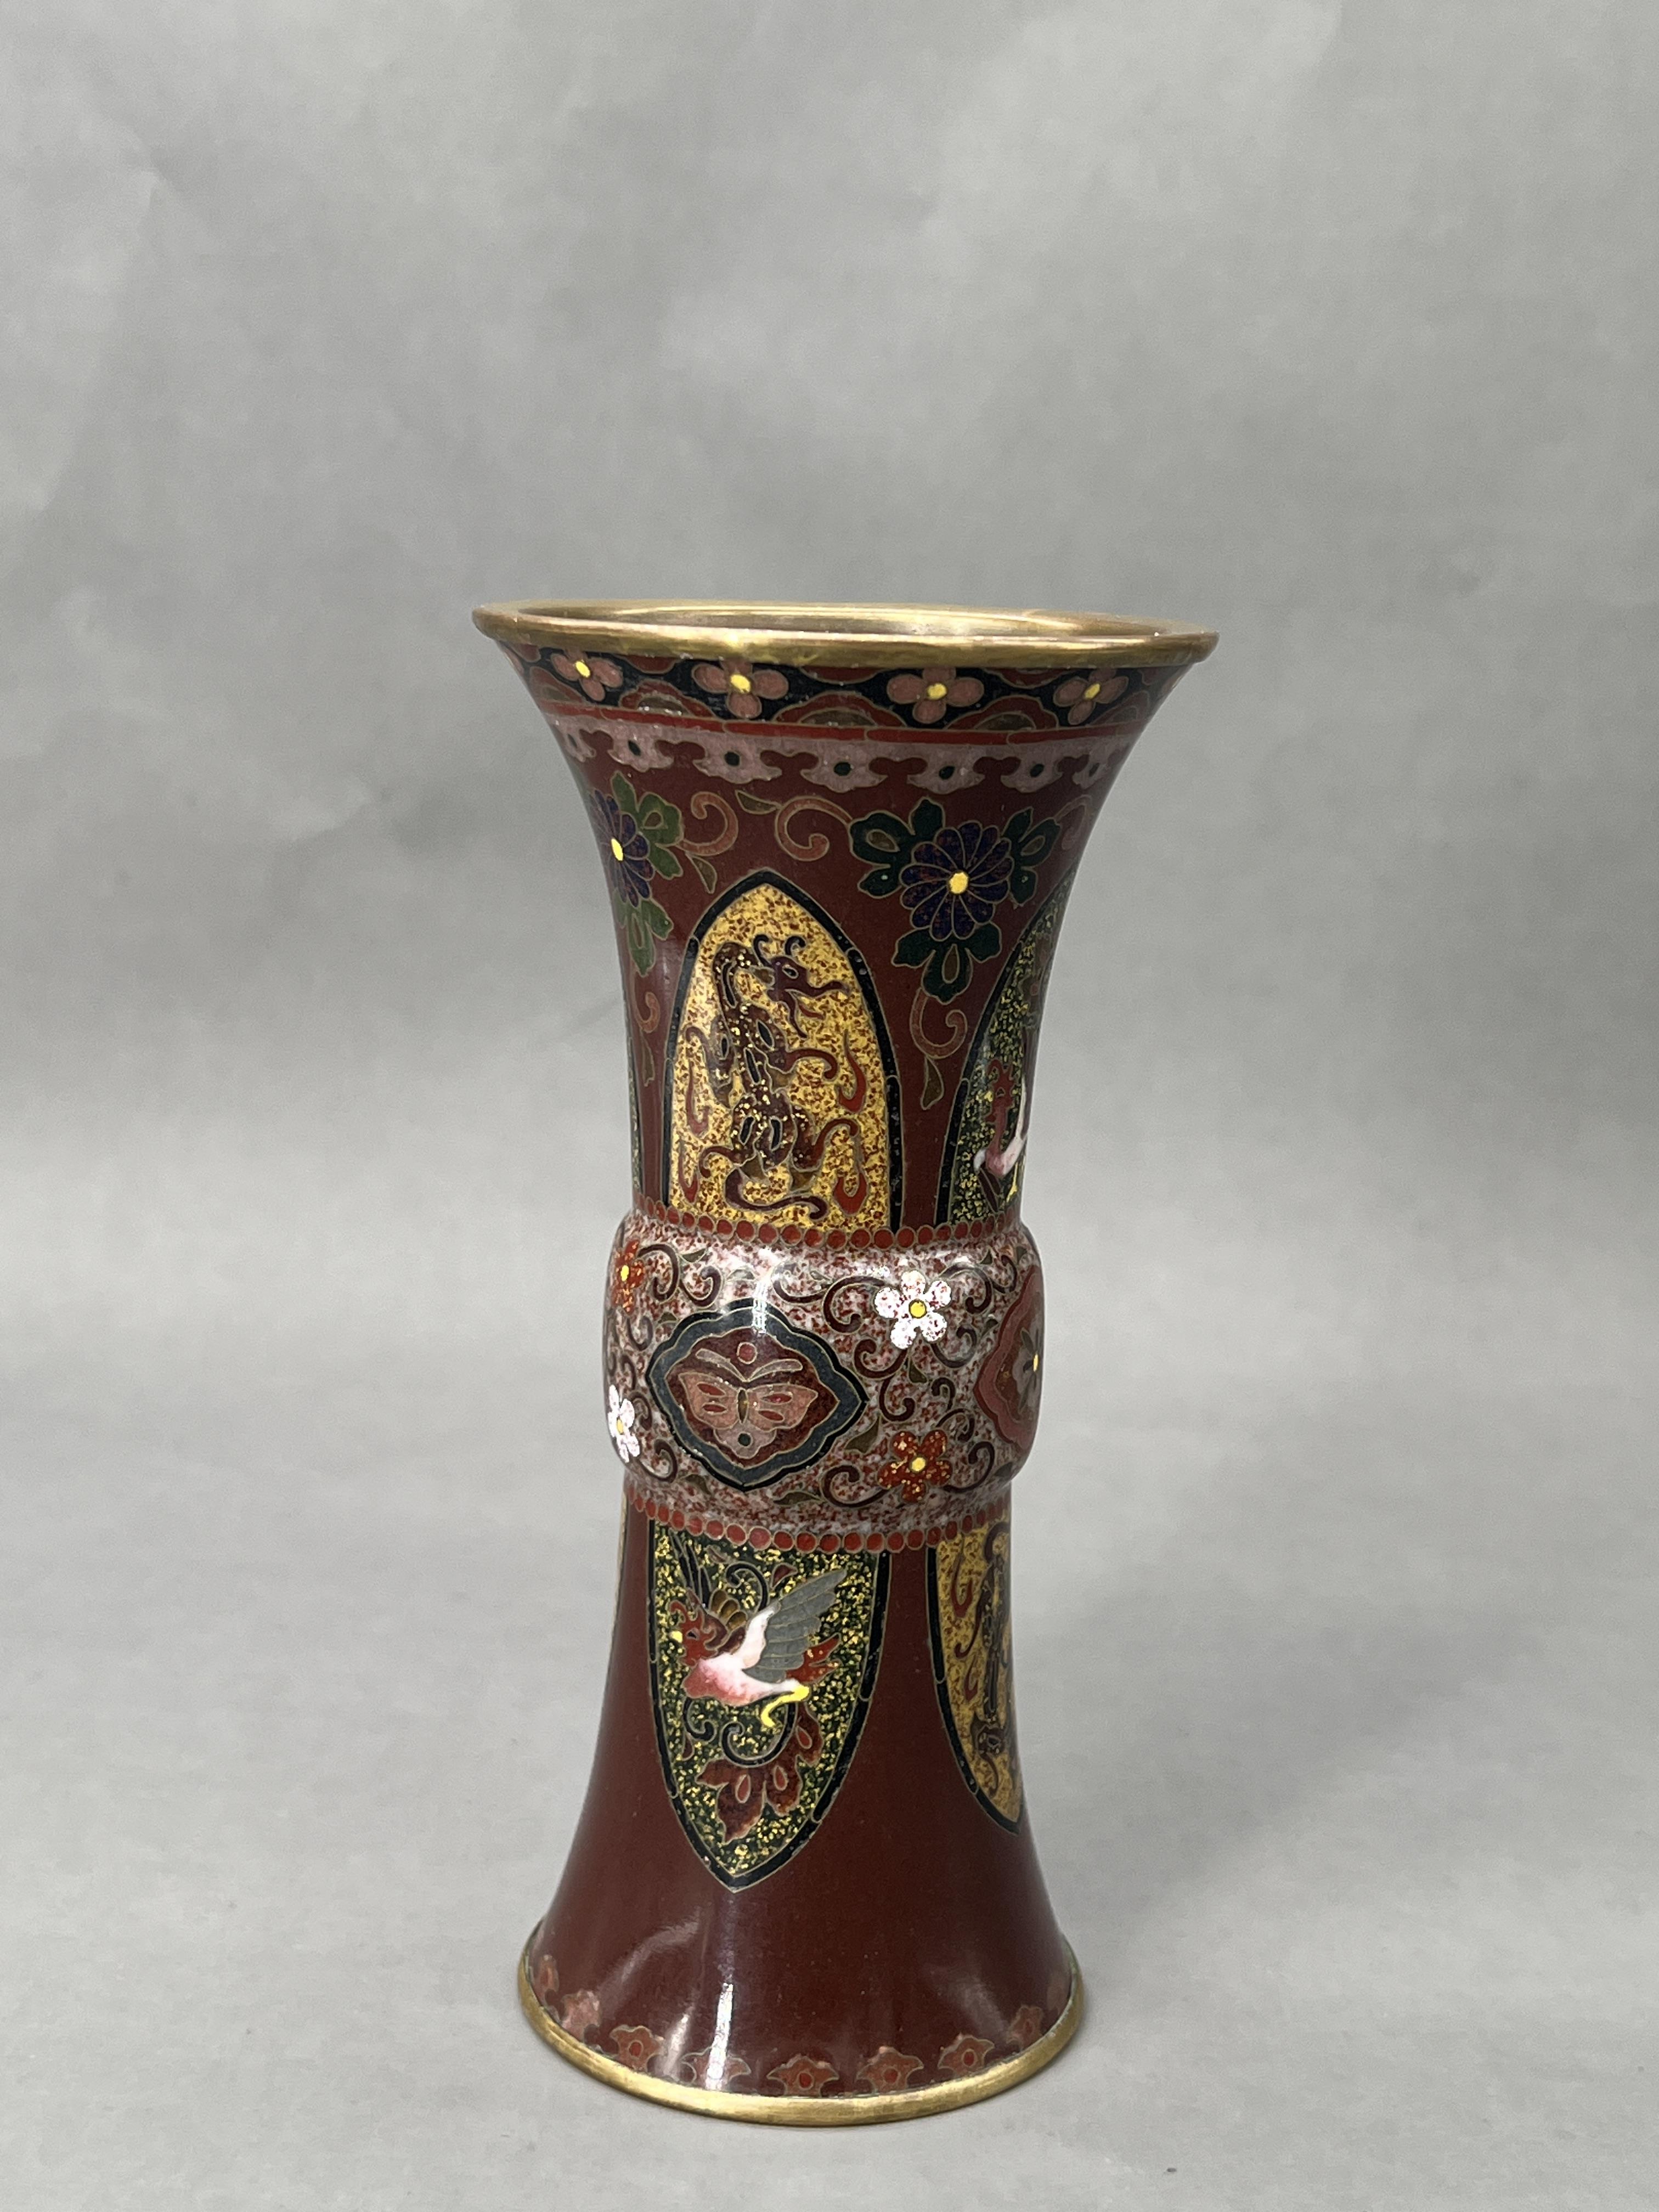 A Japanese Cloisonne Beaker Vase, attributed to Honda Yasaburo (active c.1870s to 1910)the sides